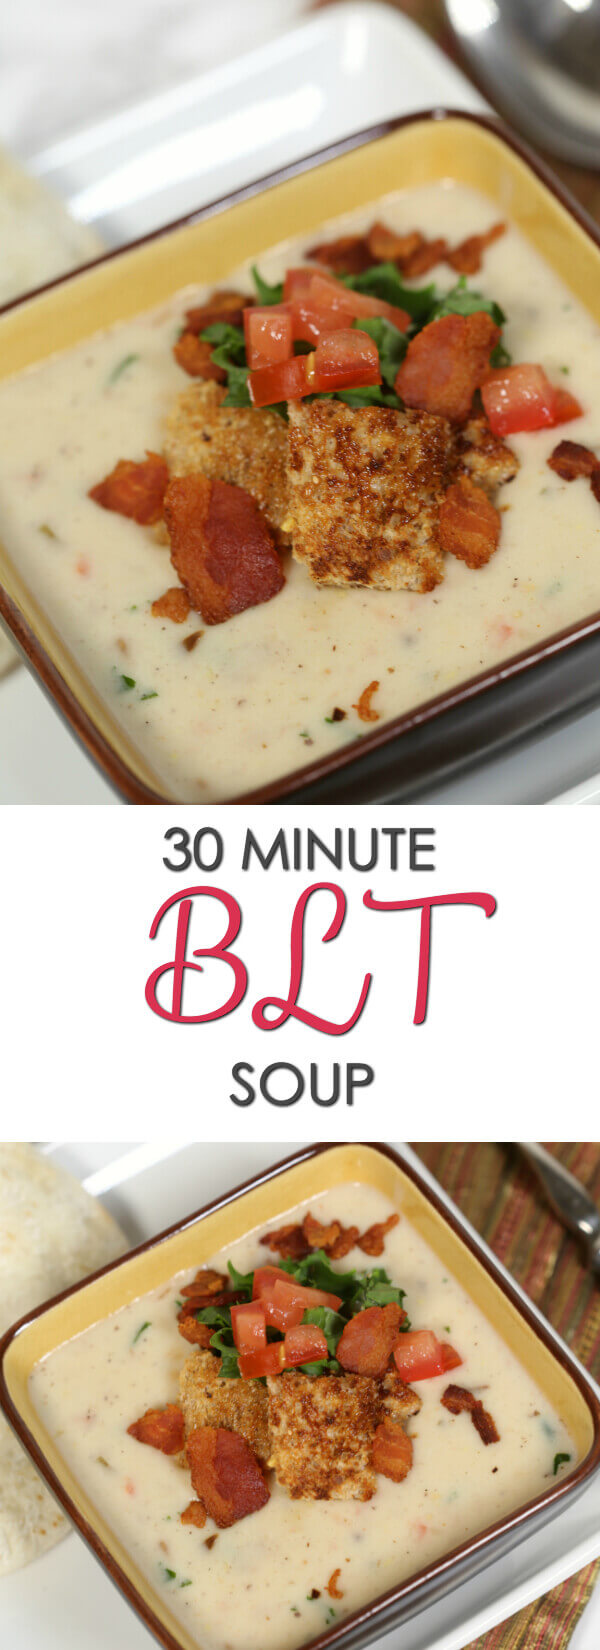 Creamy BLT Soup Recipe in a casserole dish. 